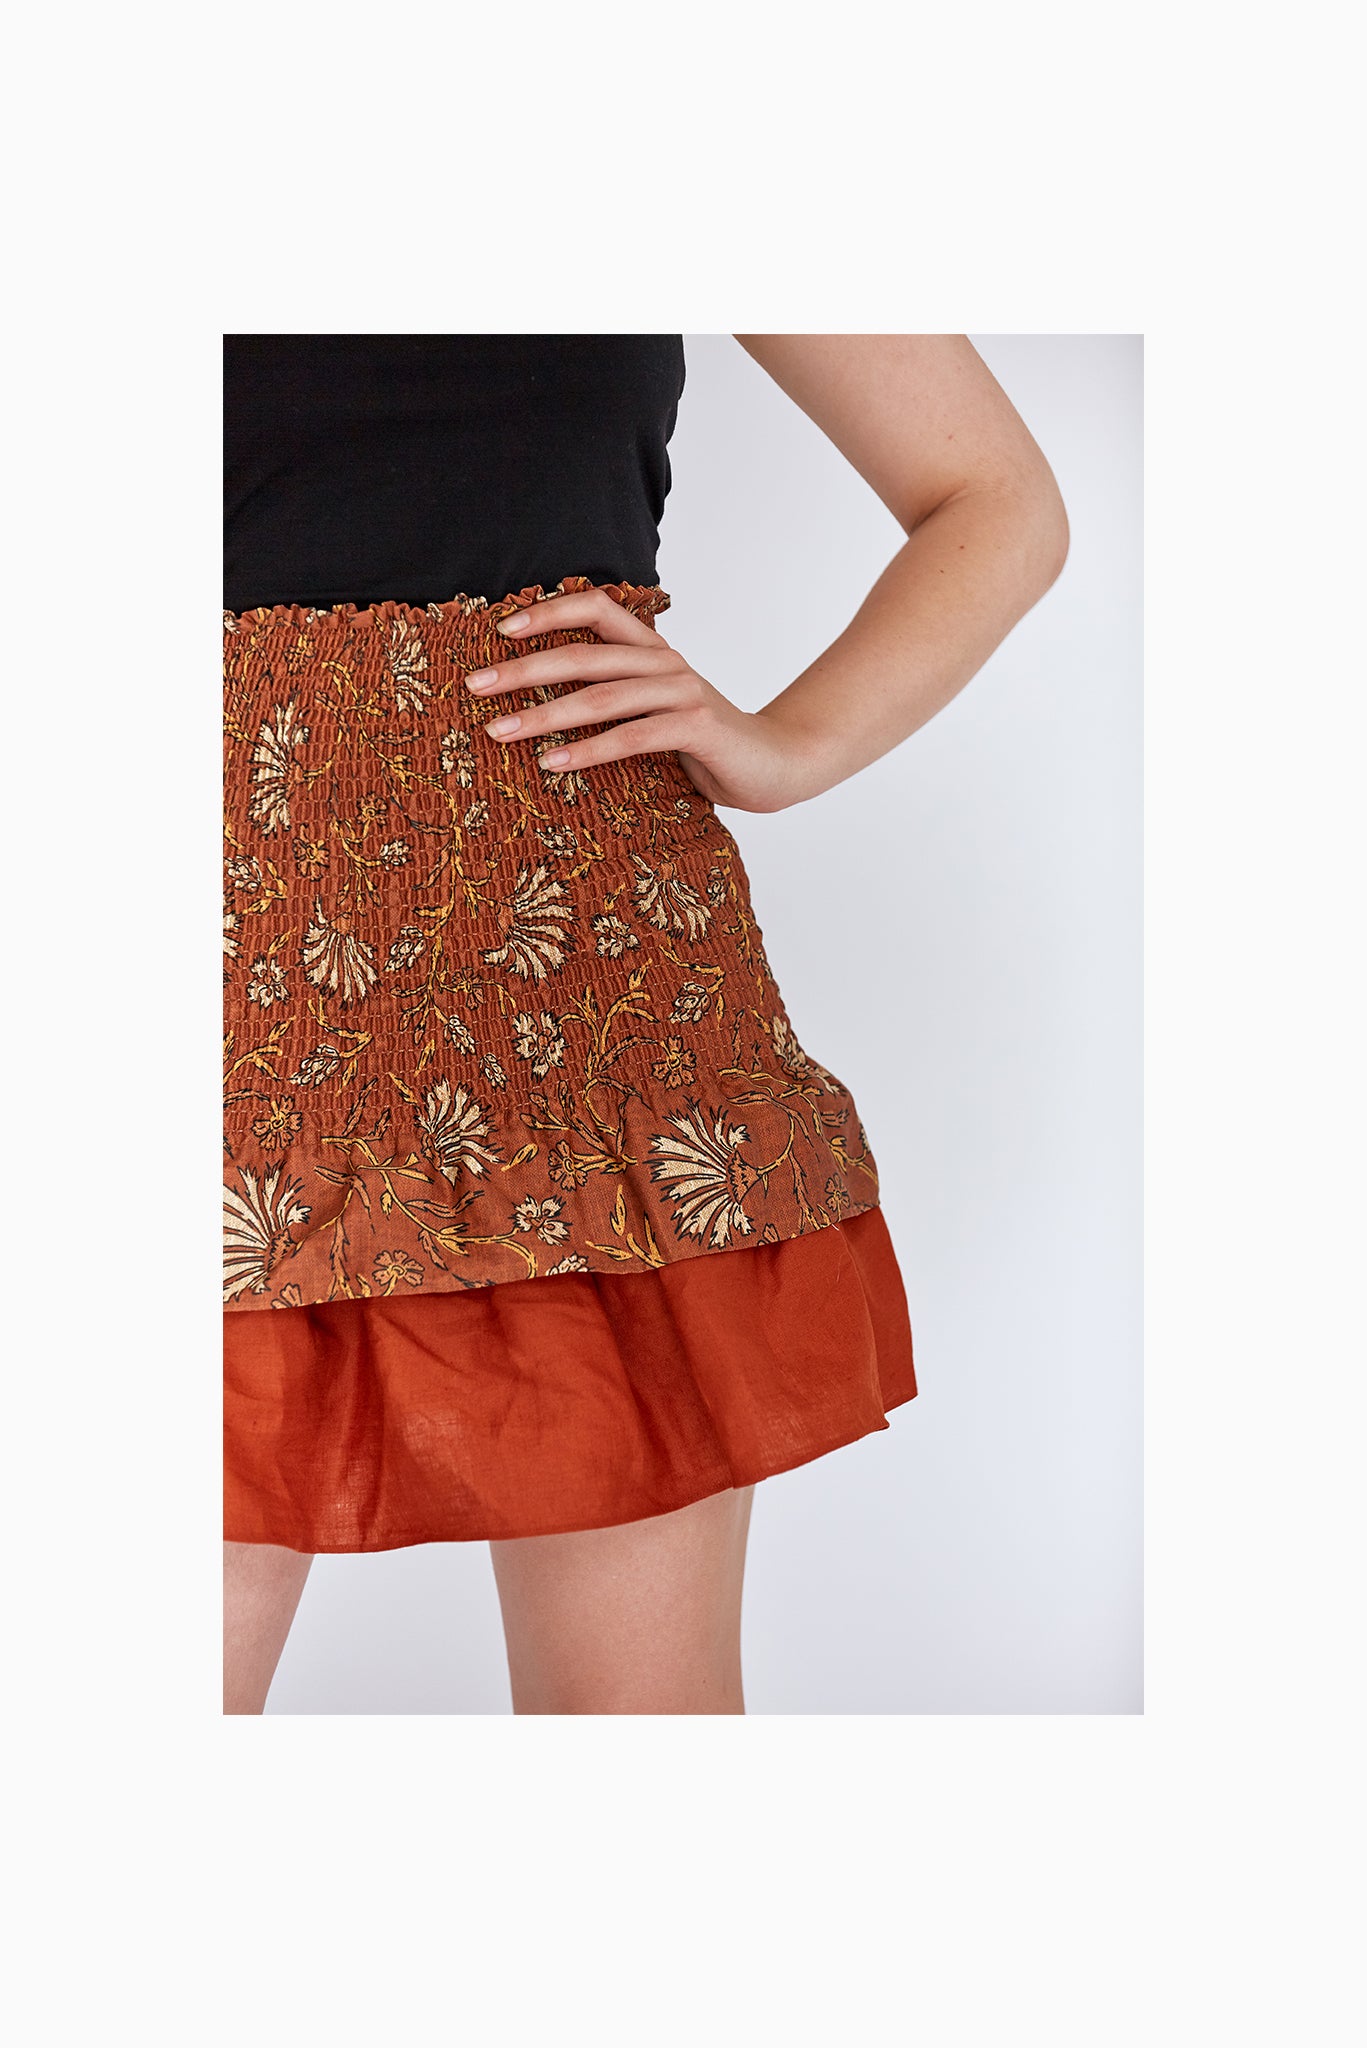 Fawn Skirt Set PAPER Pattern